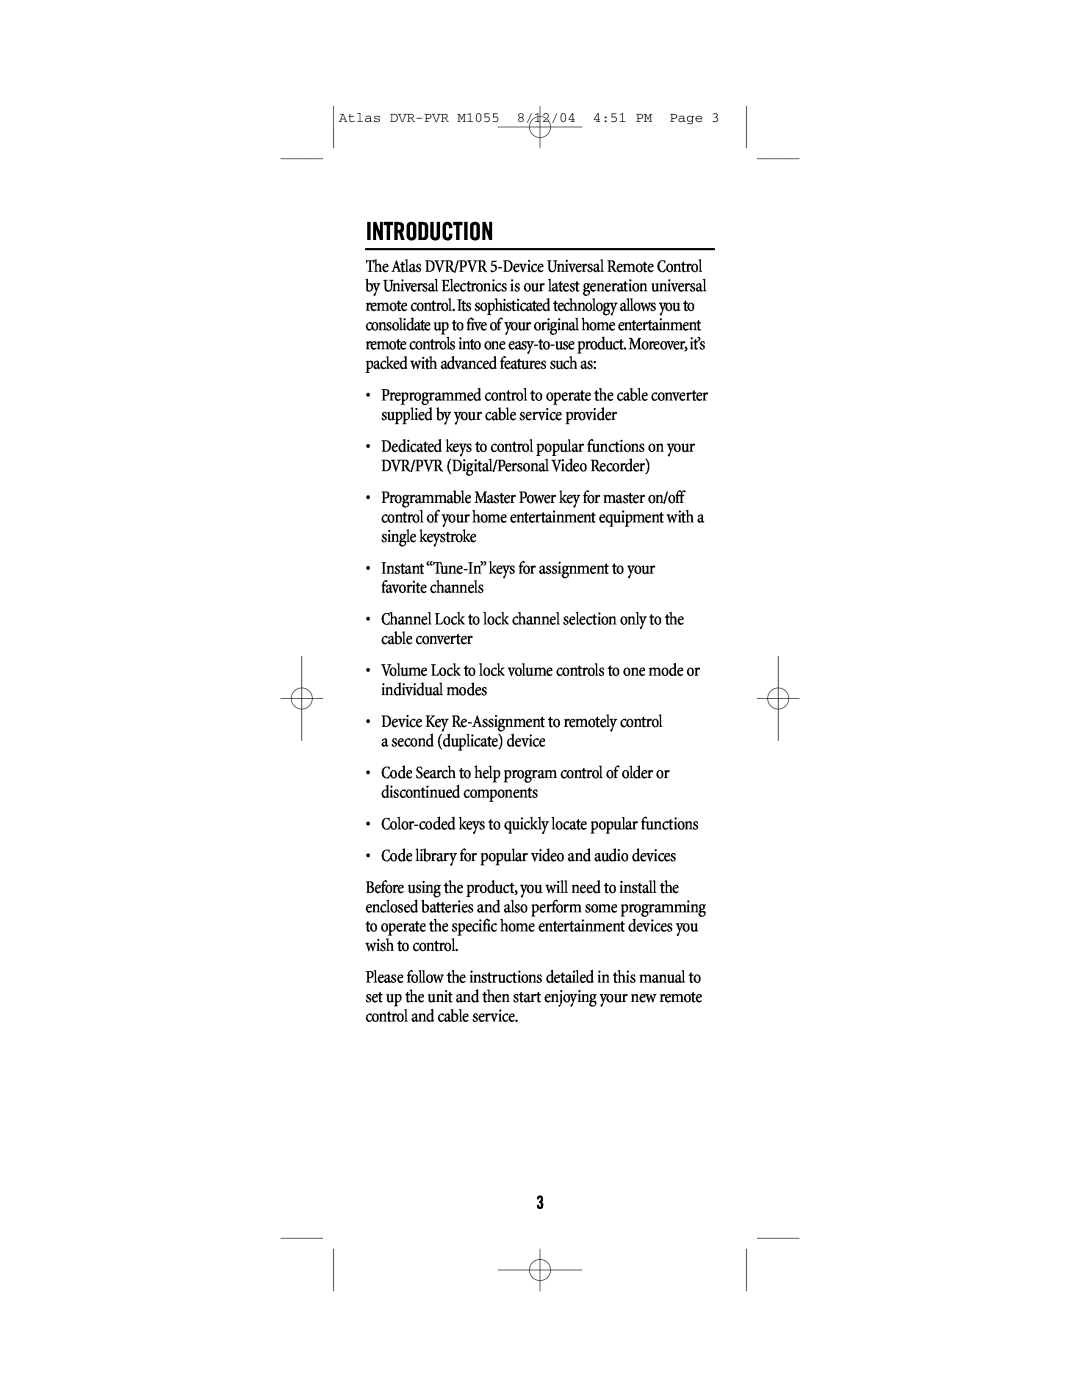 Universal Electronics PVR 5 manual Introduction 